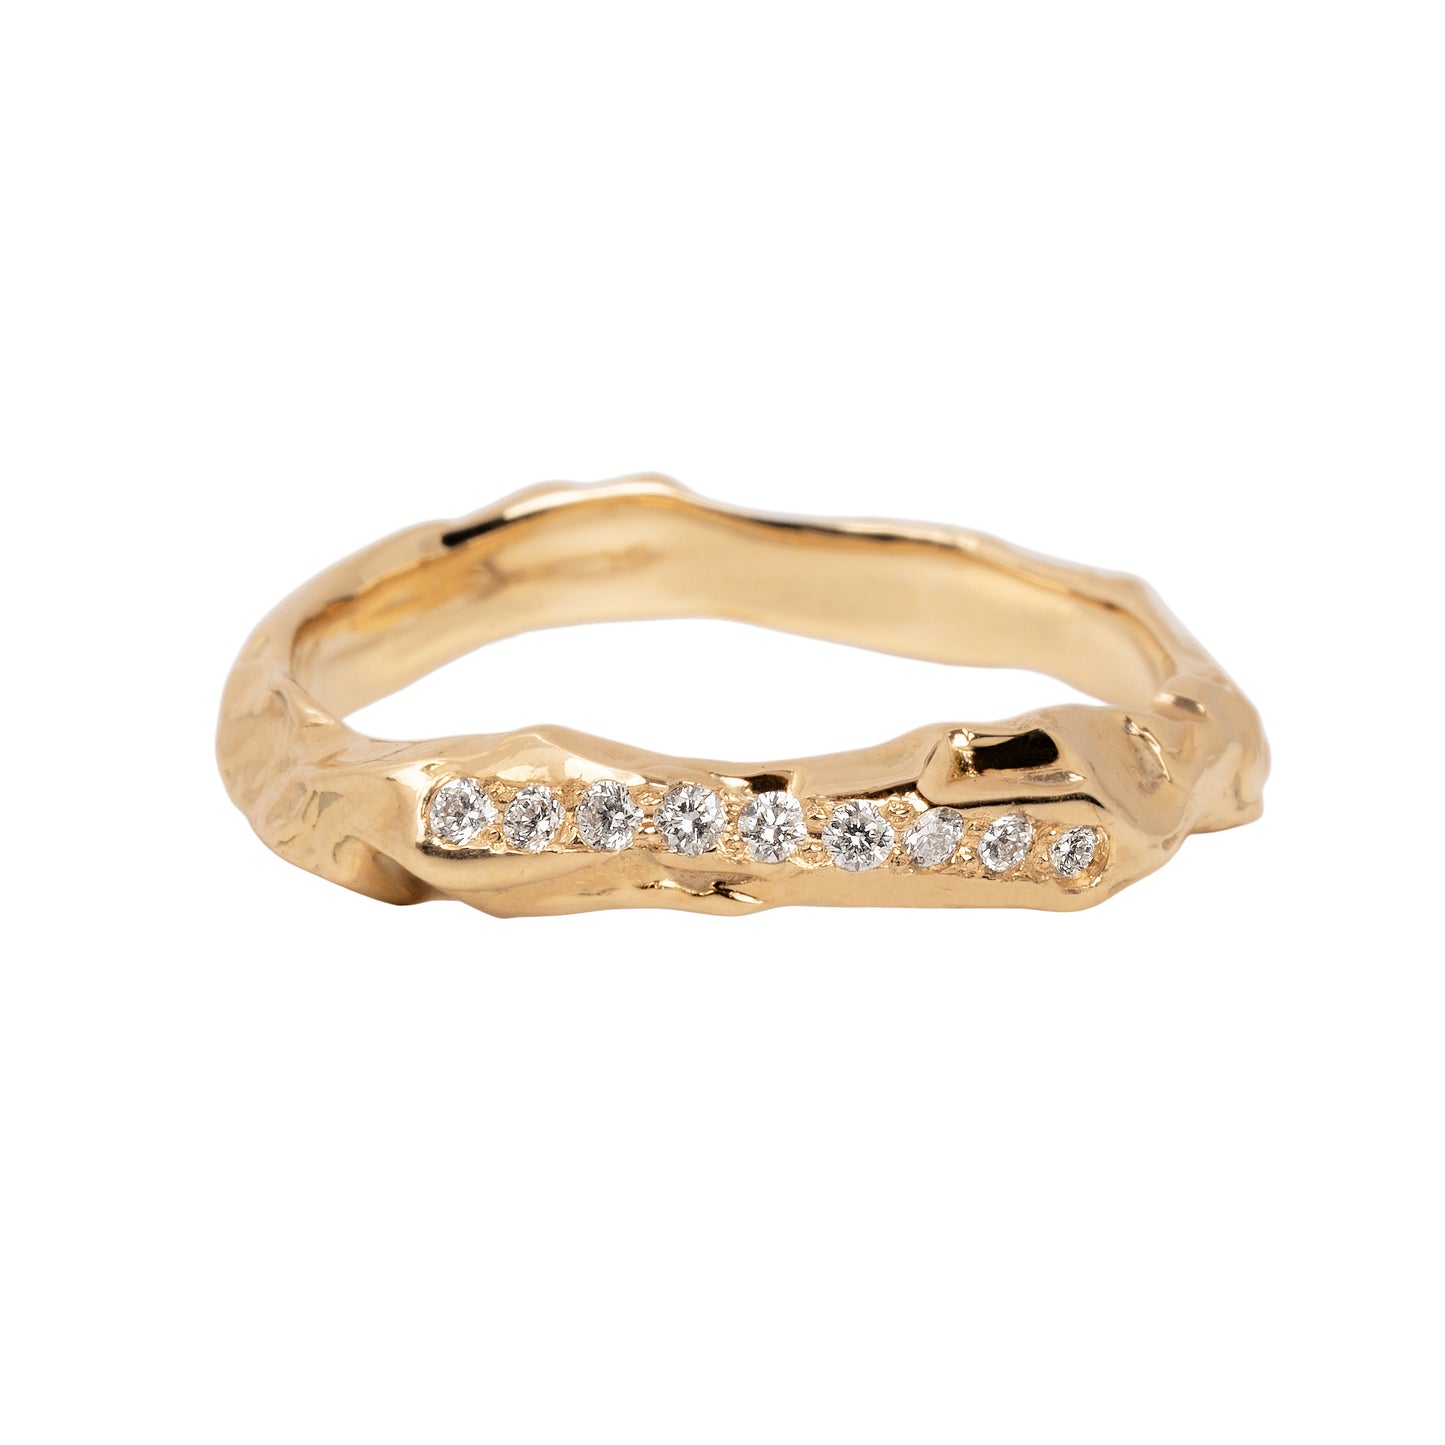 Luna Exclusiva pave diamonds gold ring